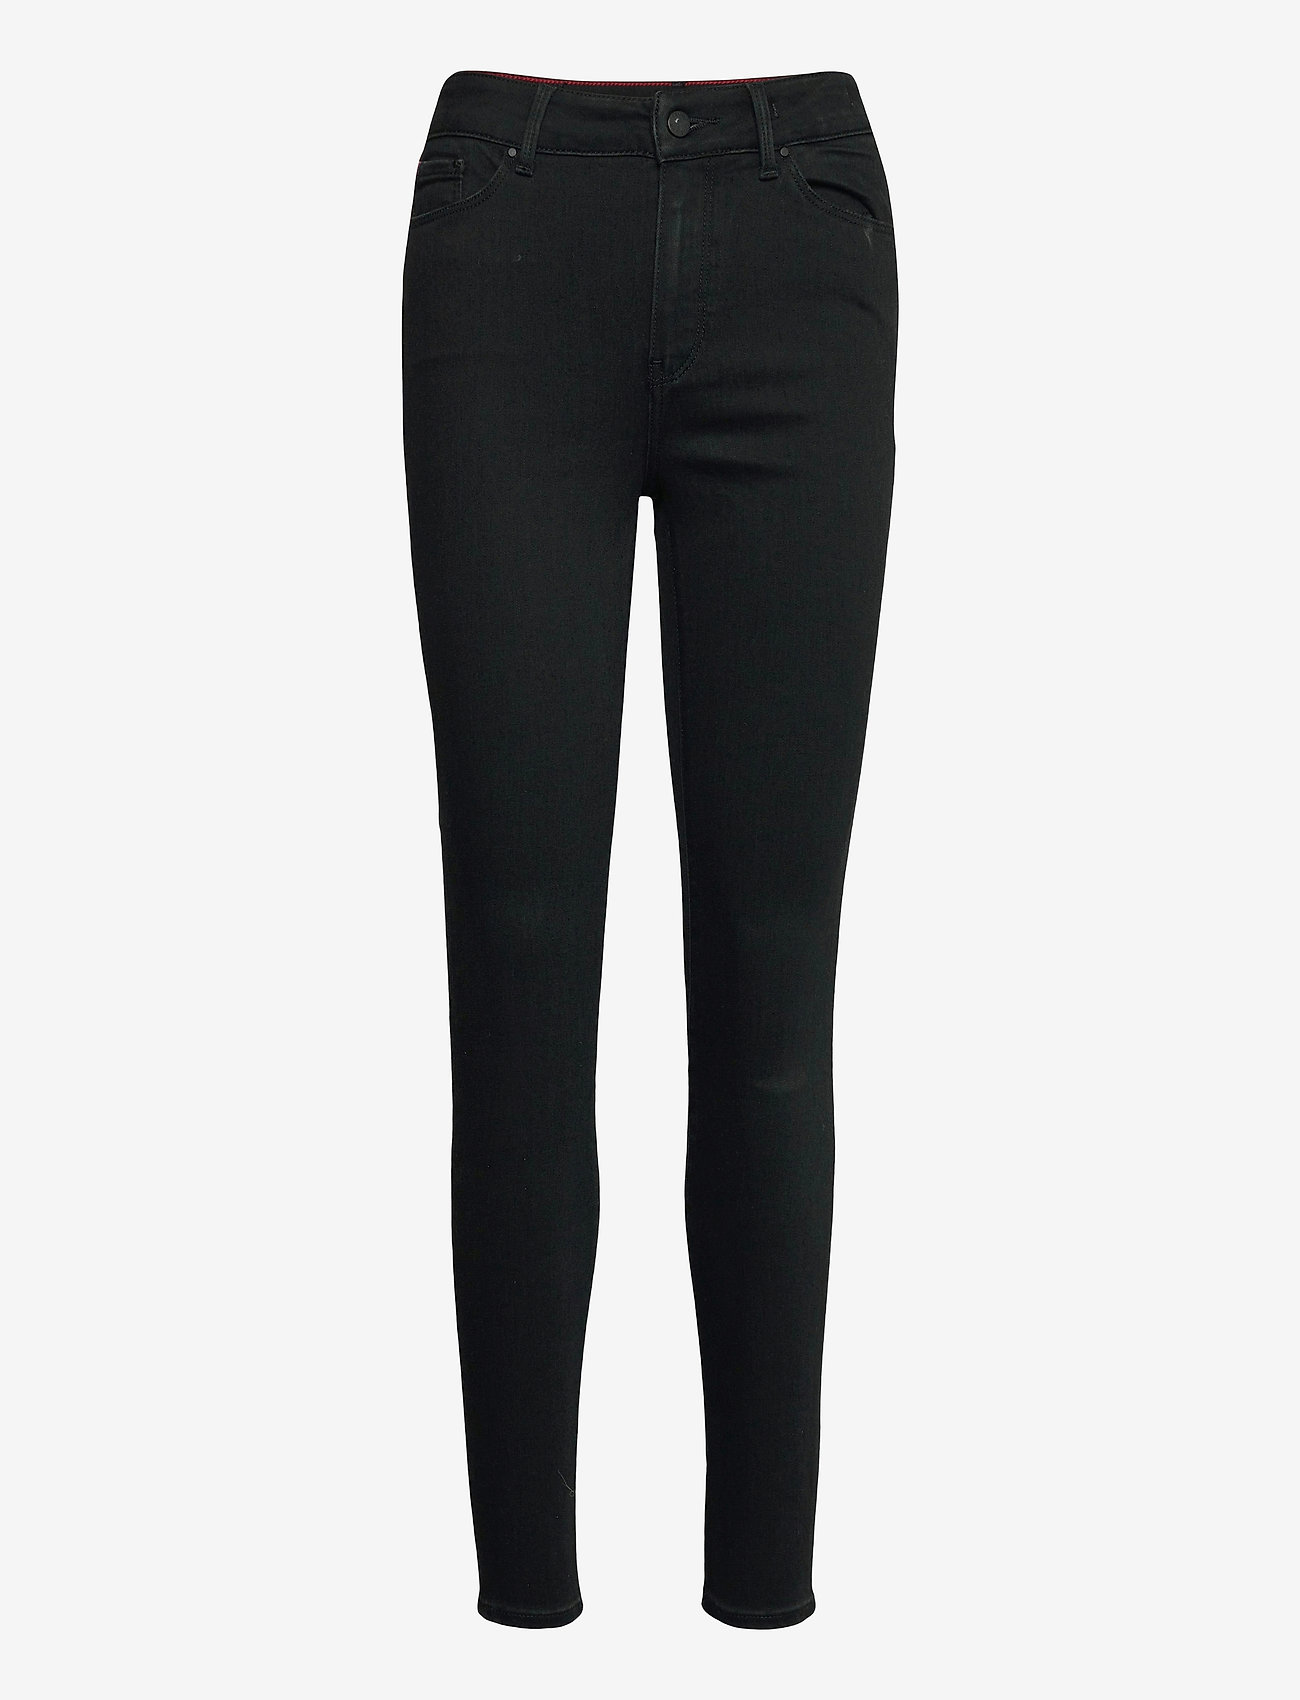 black skinny flex jeans